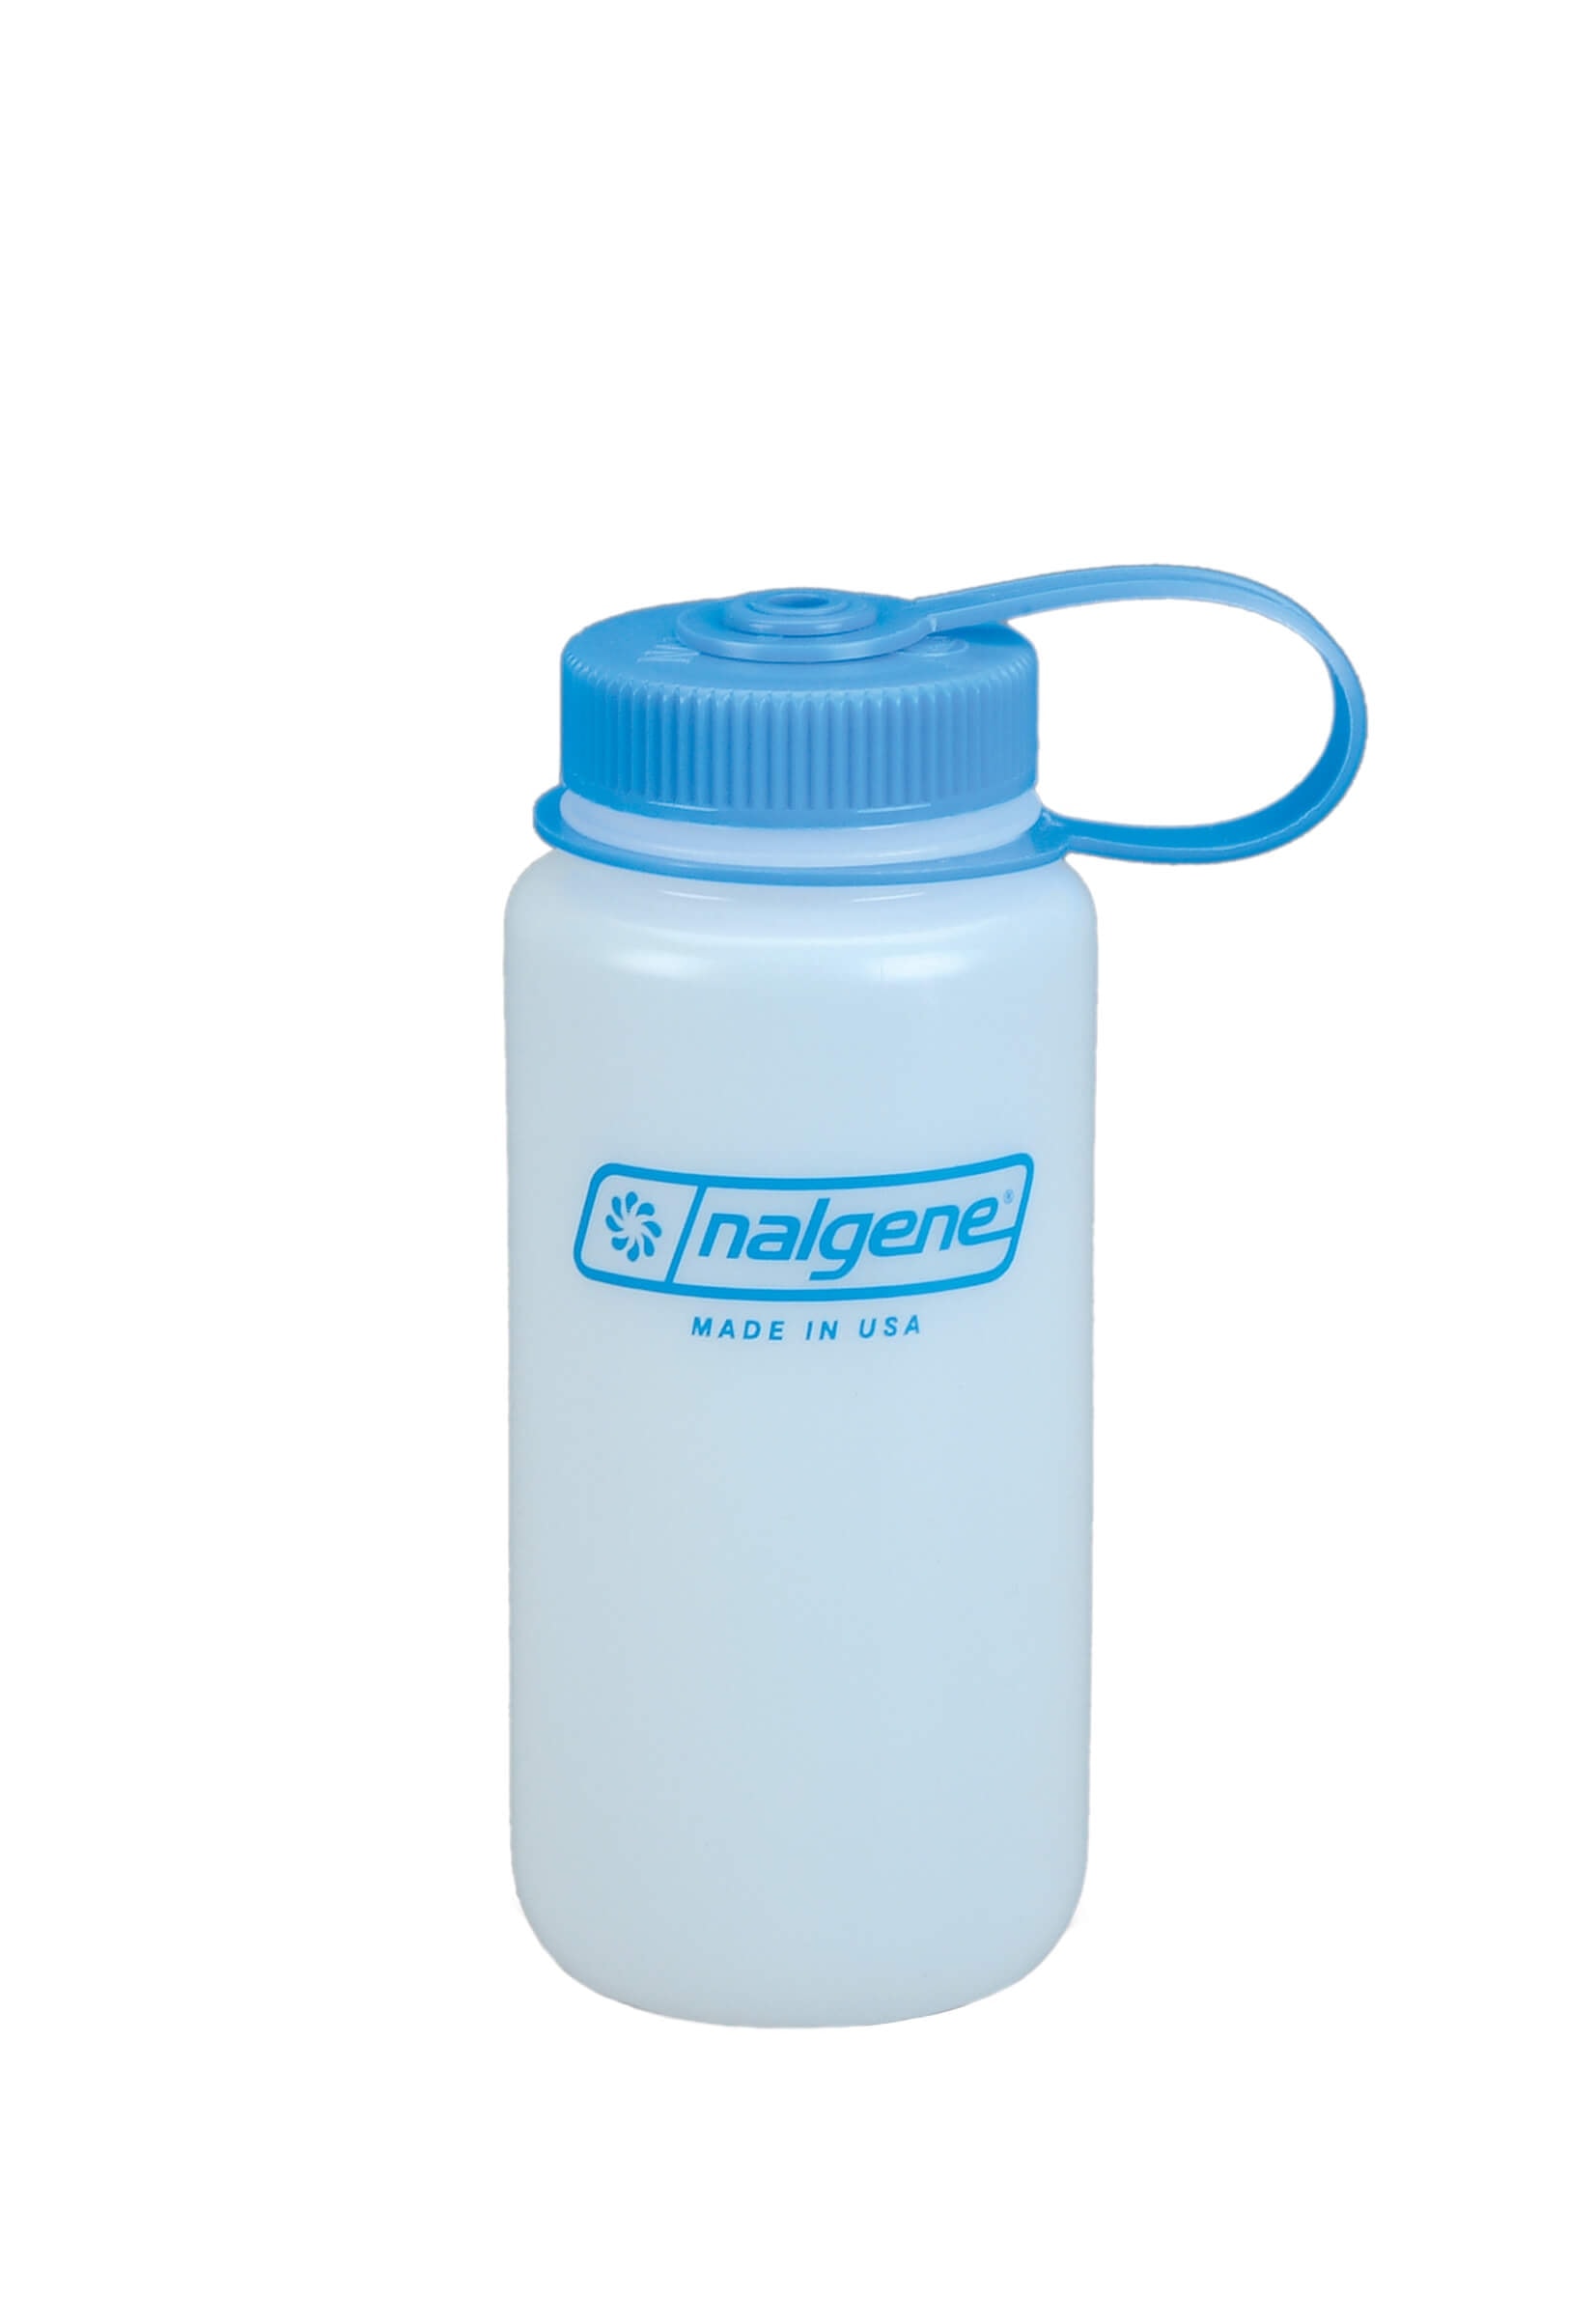 NEW Nalgene Ultralite Wide Mouth 2oz BPA-Free HDPE Round Storage Bottle 